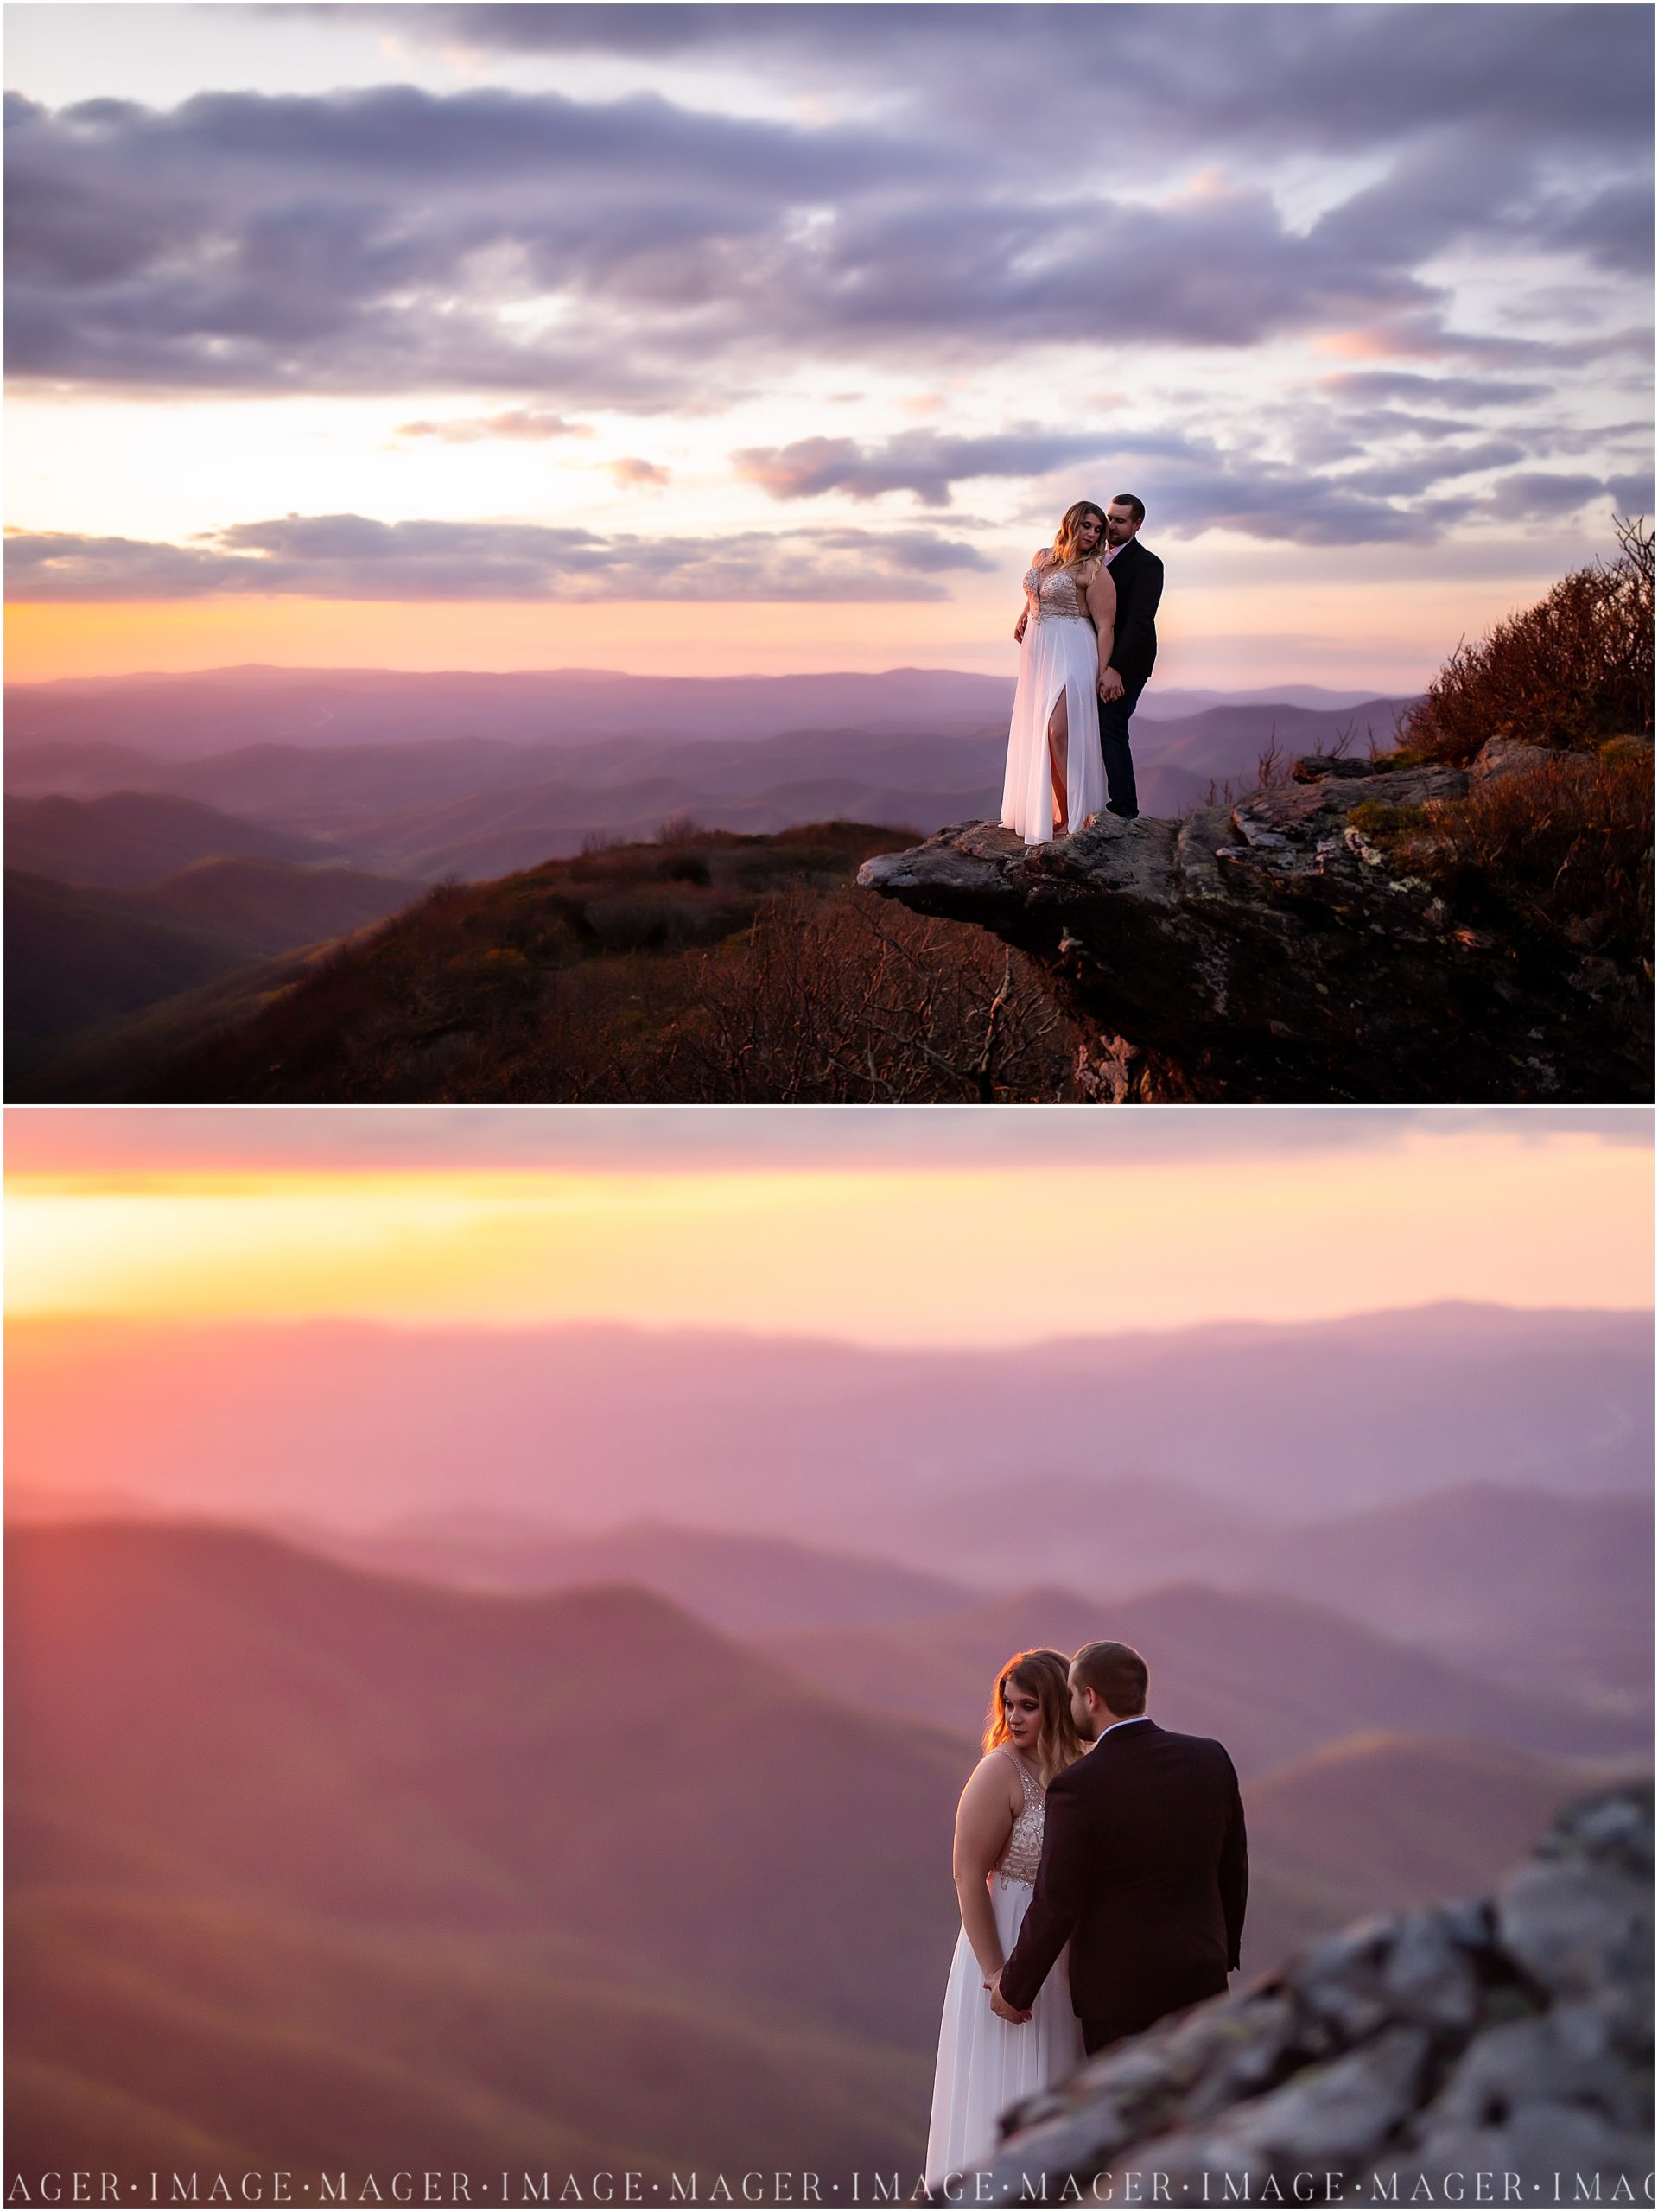 craggy pinnacle mountain top sunset wedding